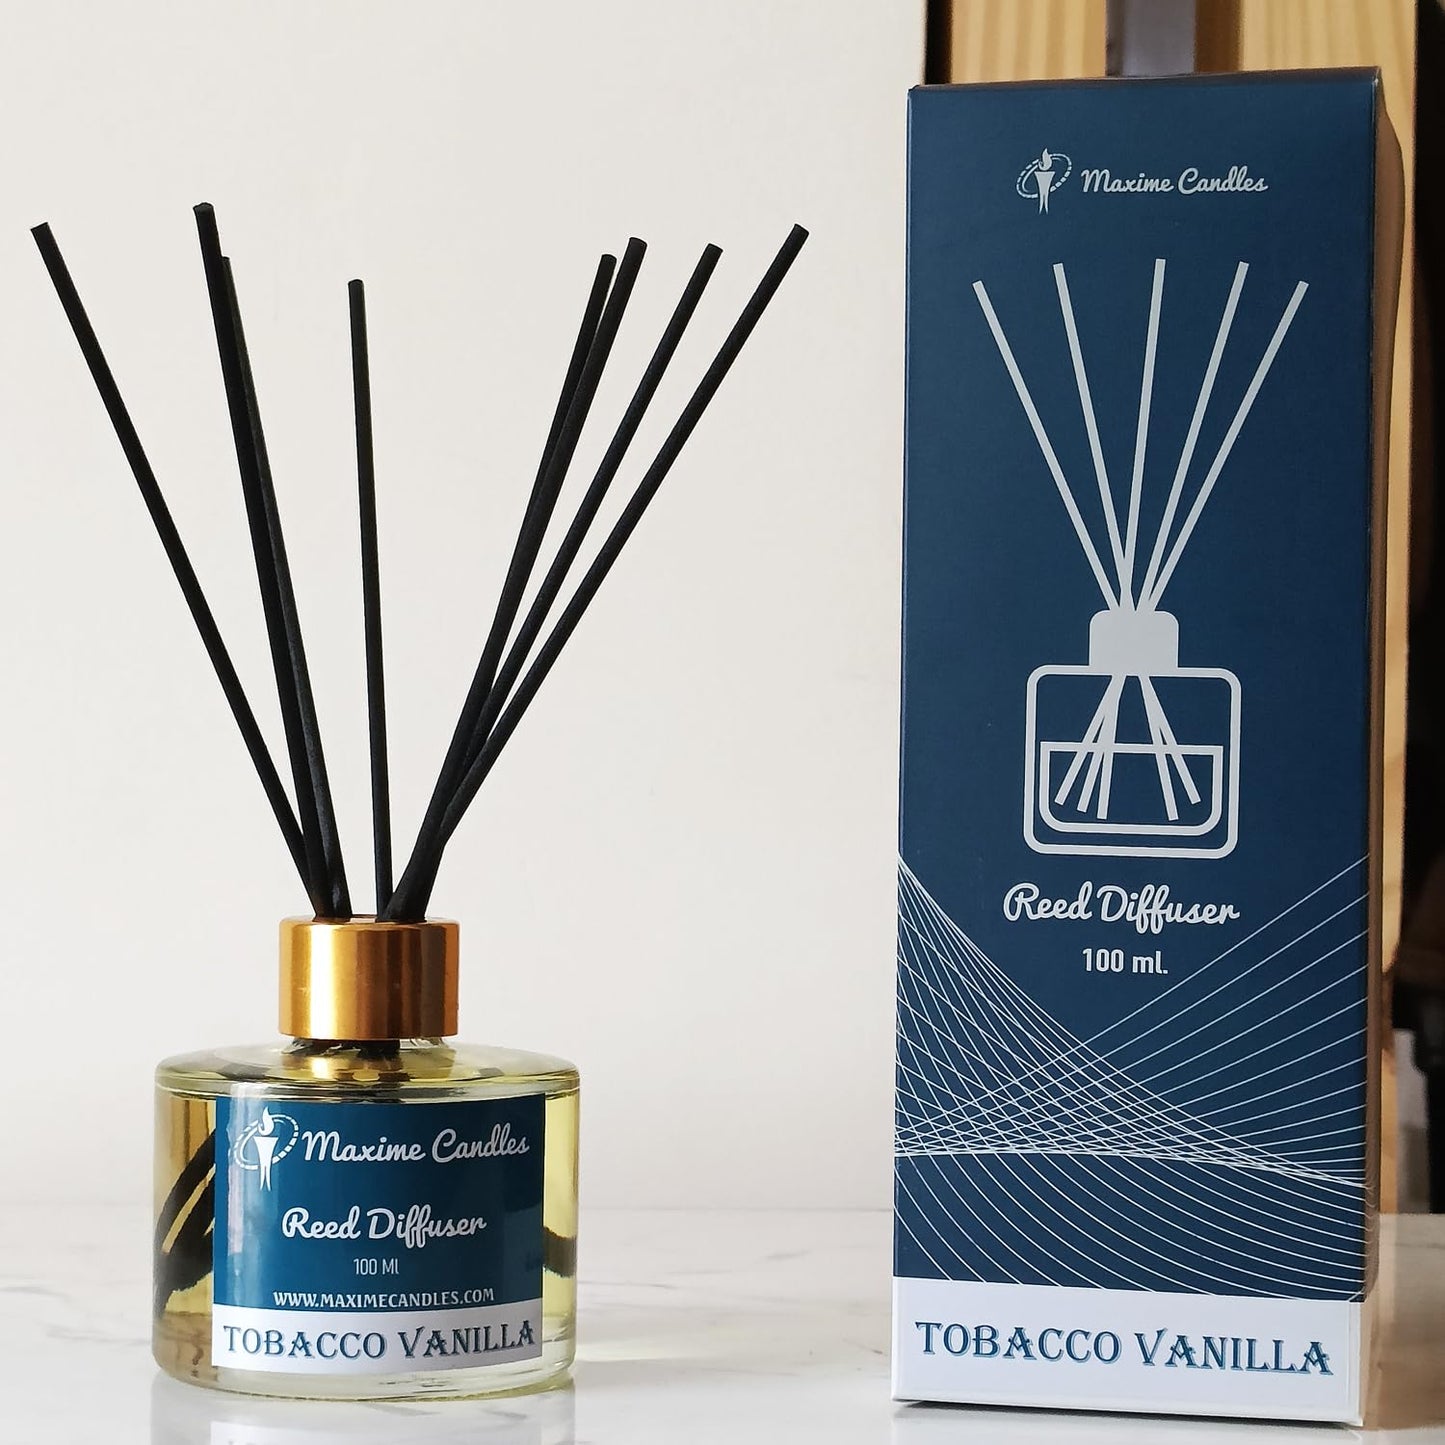 Tobacco Vanilla Reed Diffuser Set – 100 Ml with 8 Fiber Sticks